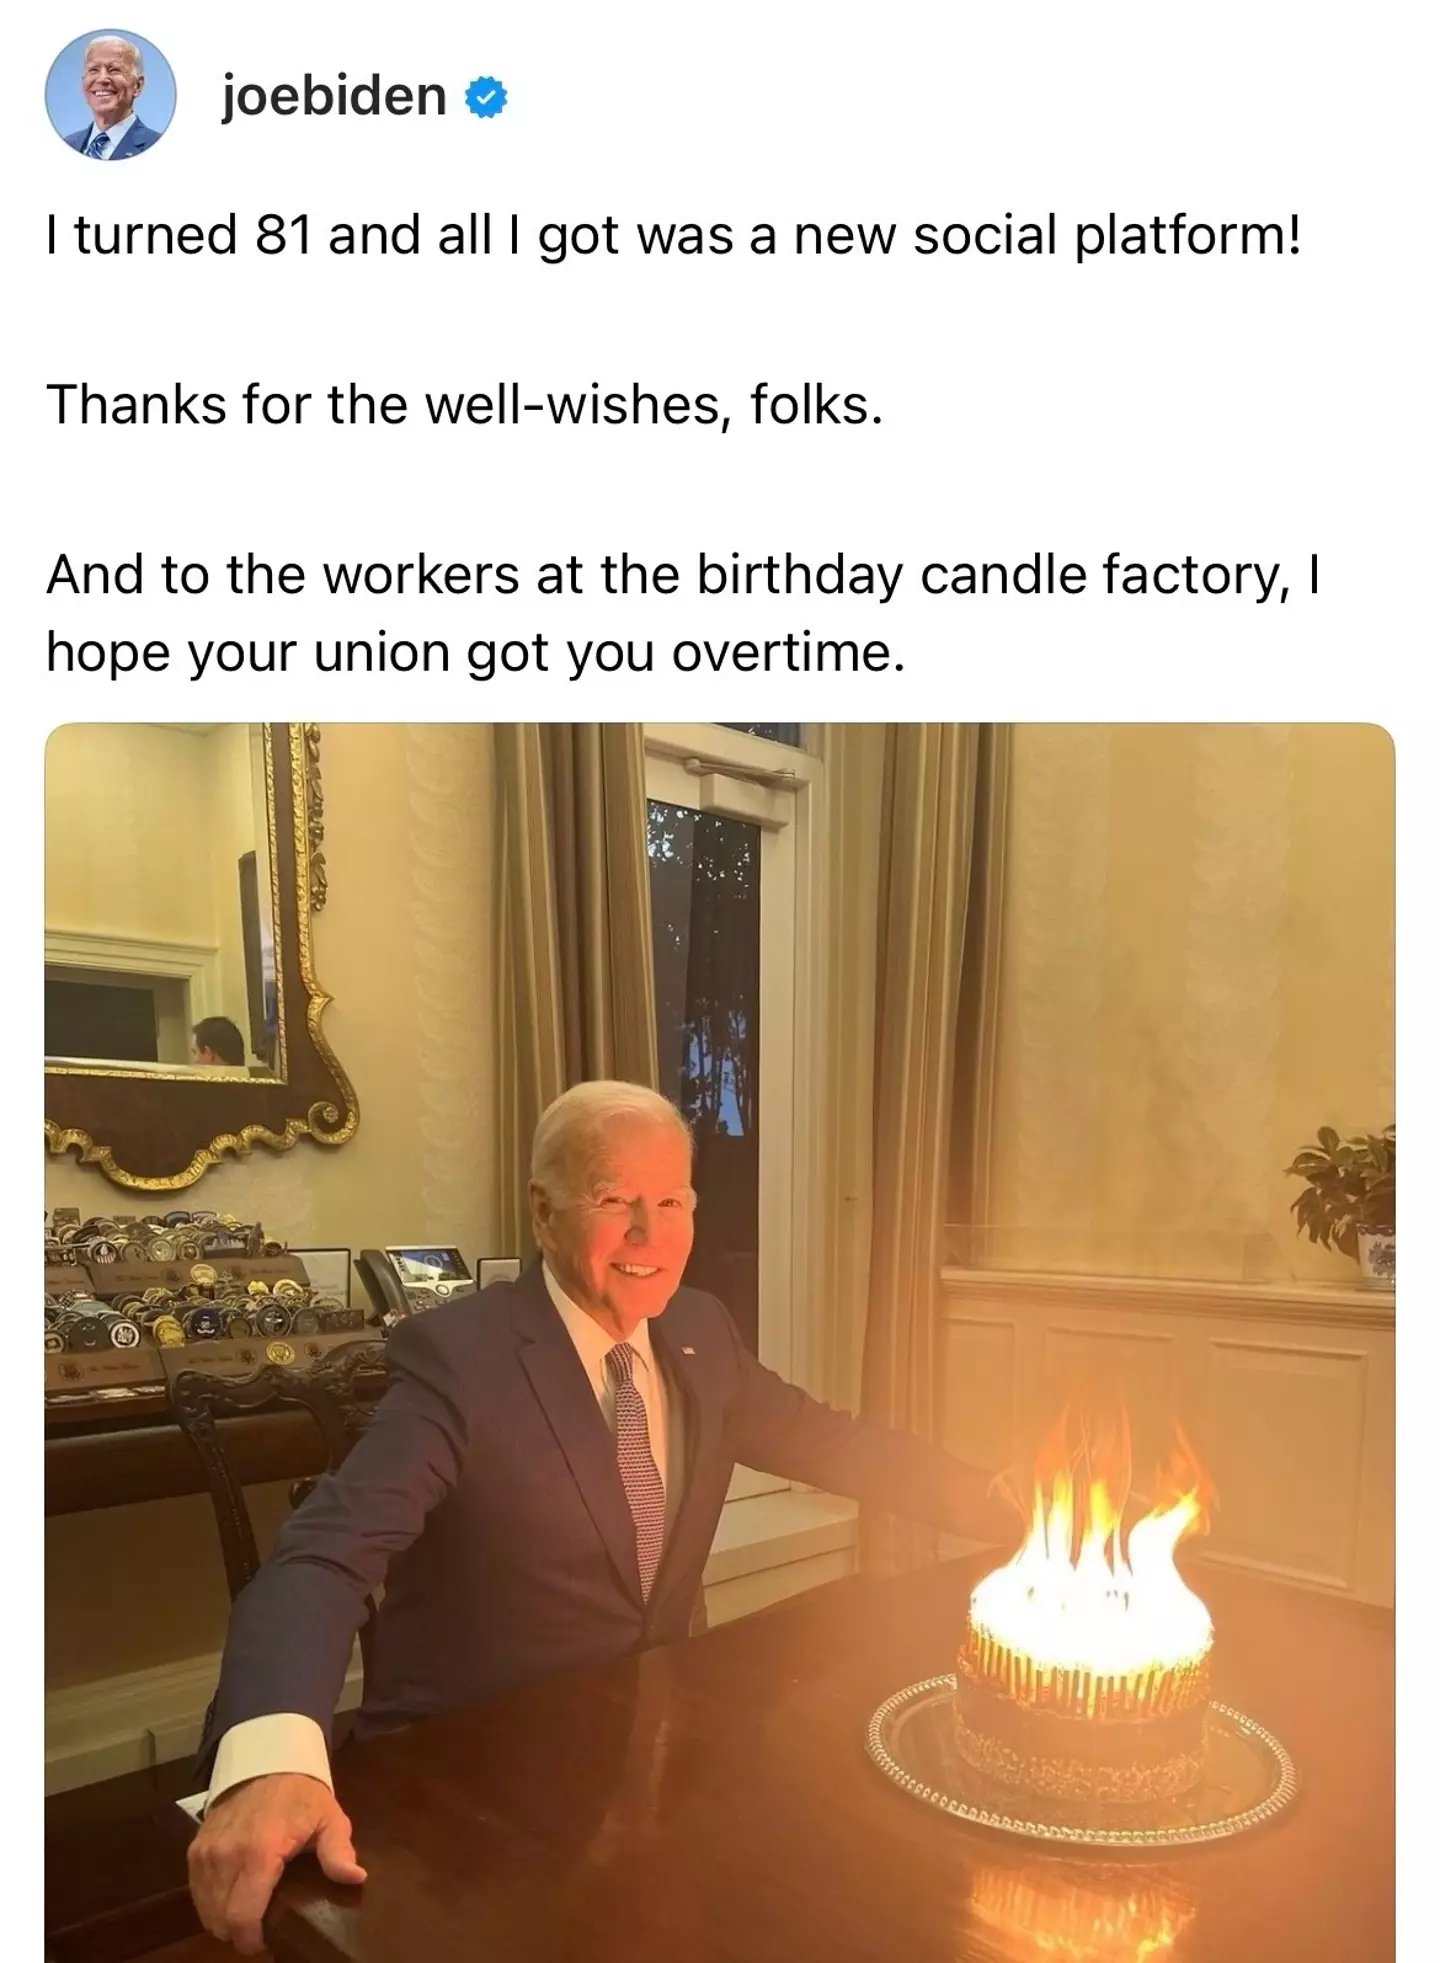 Joe Biden shared a photo of his 81st birthday cake.